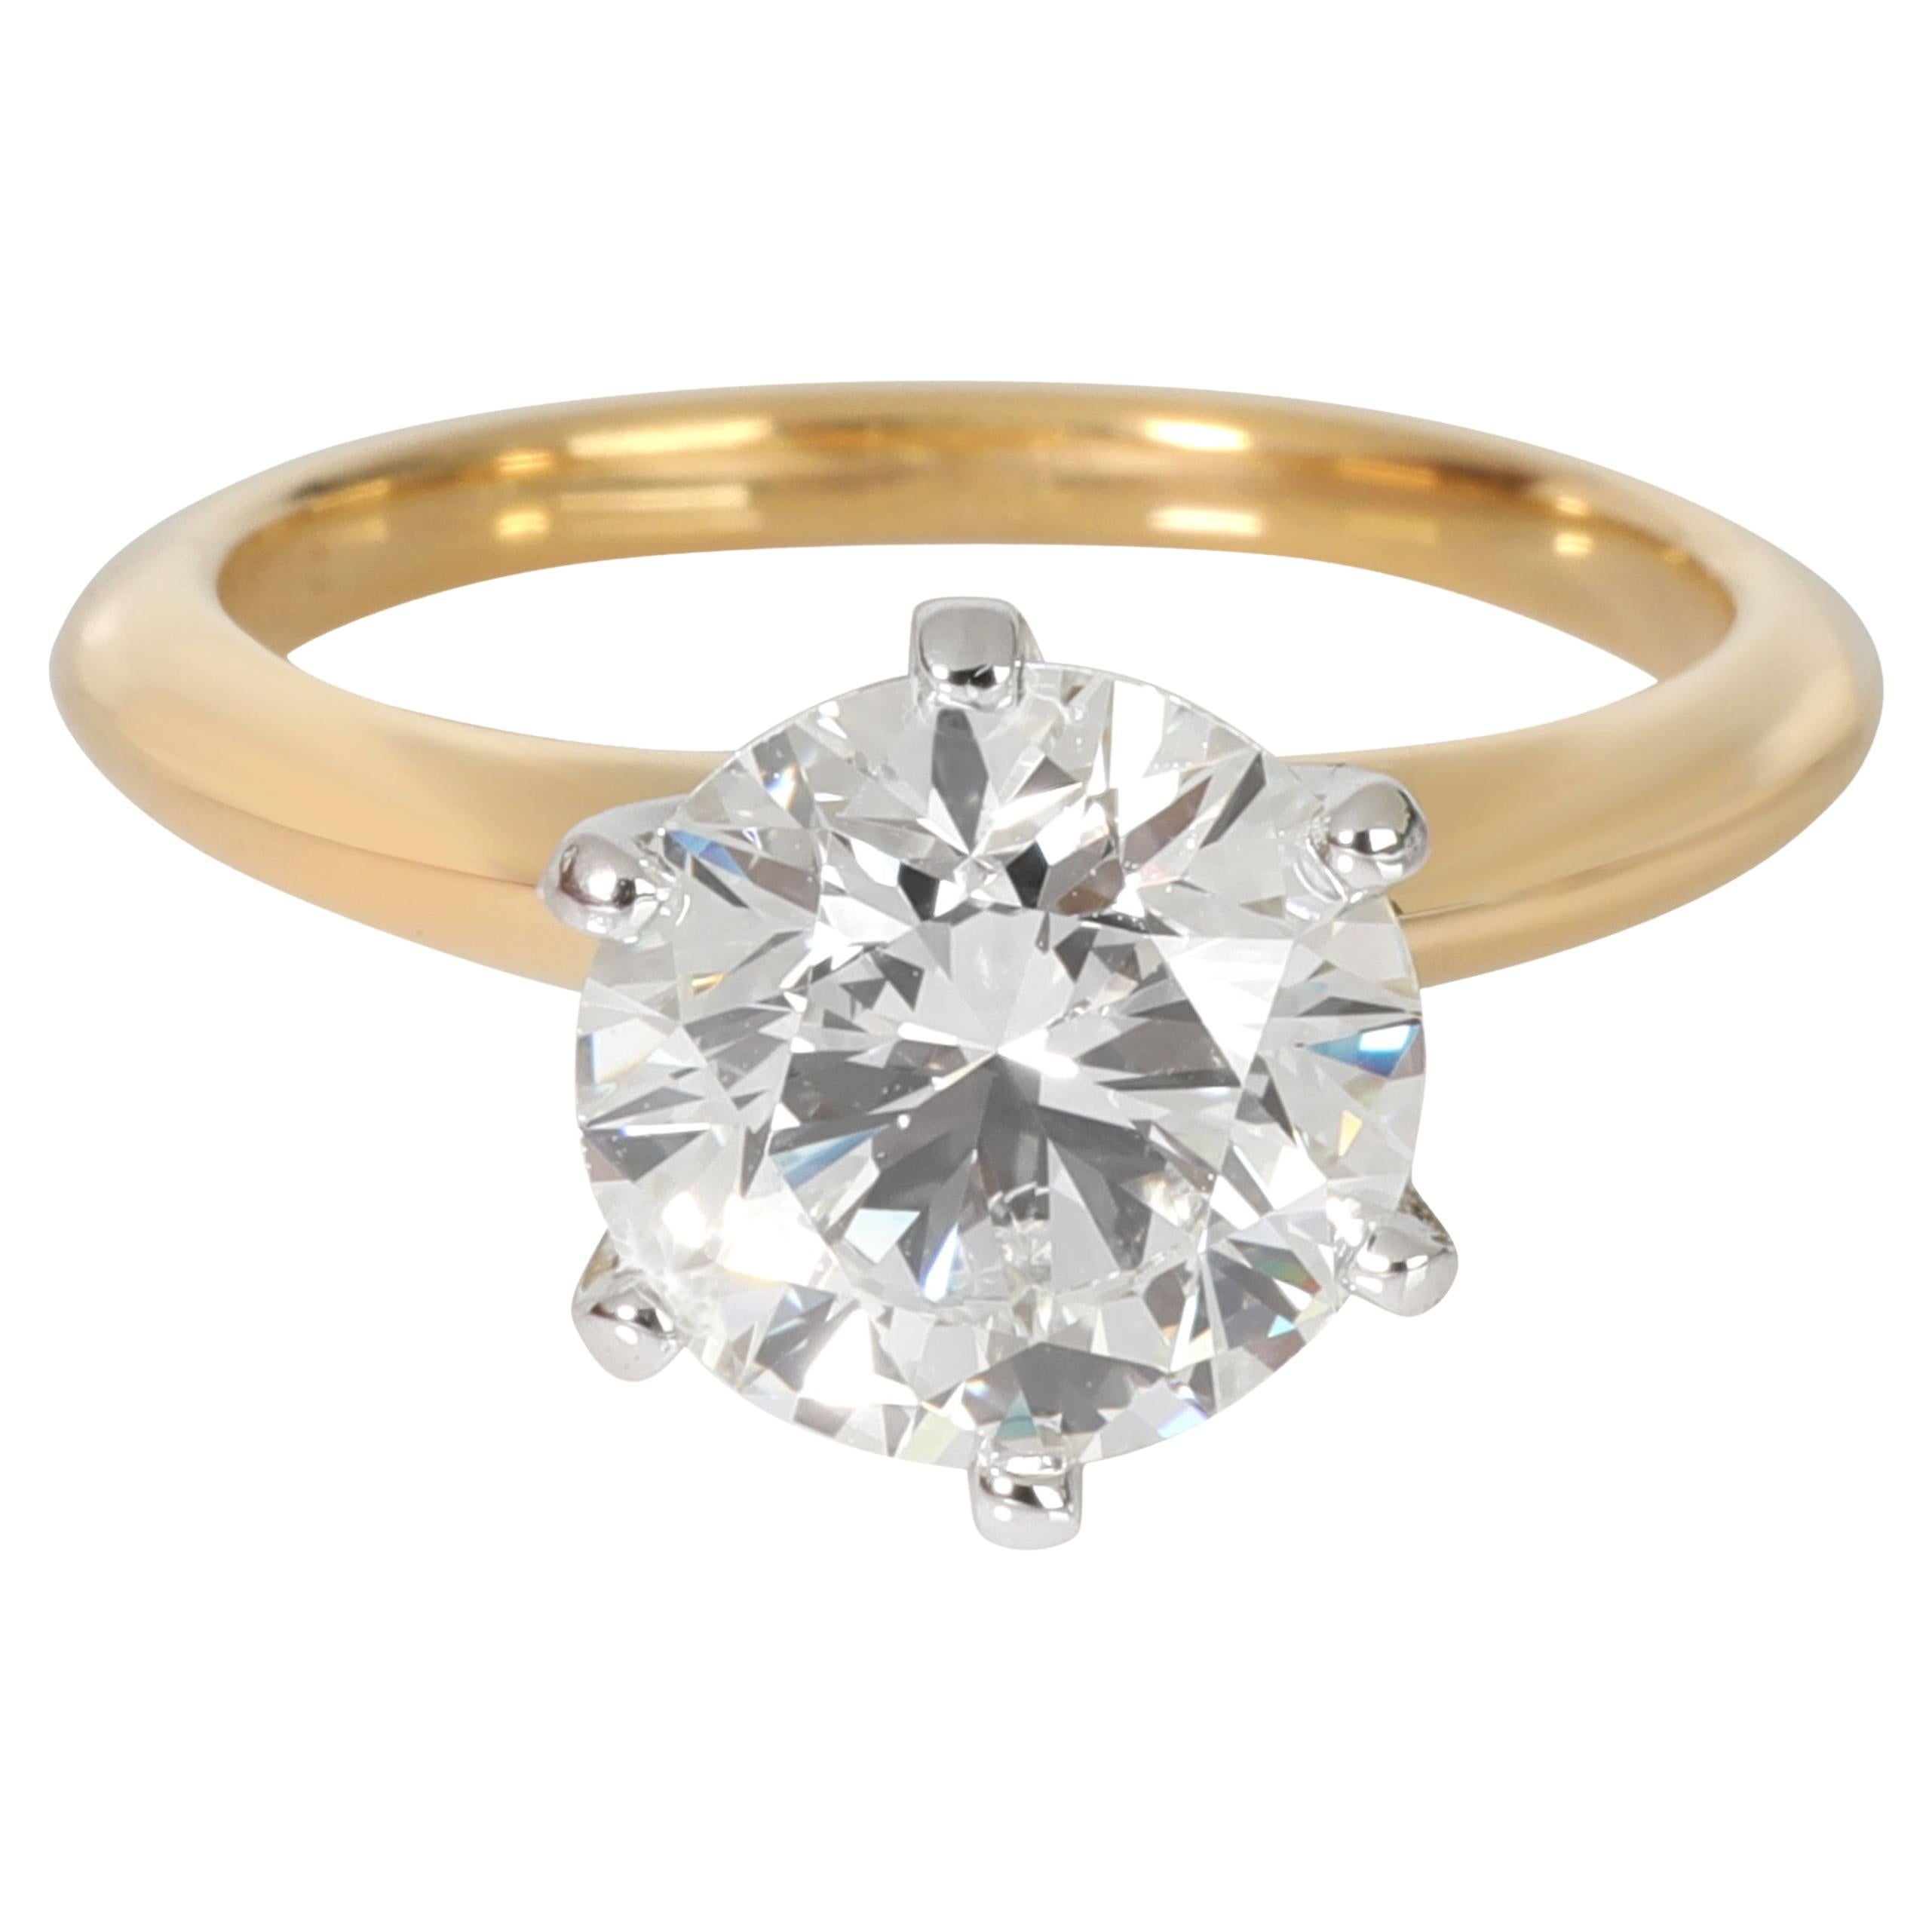 Tiffany & Co. Diamond Engagement Ring in 18K Yellow Gold/Platinum I VS1 2.34 CTW